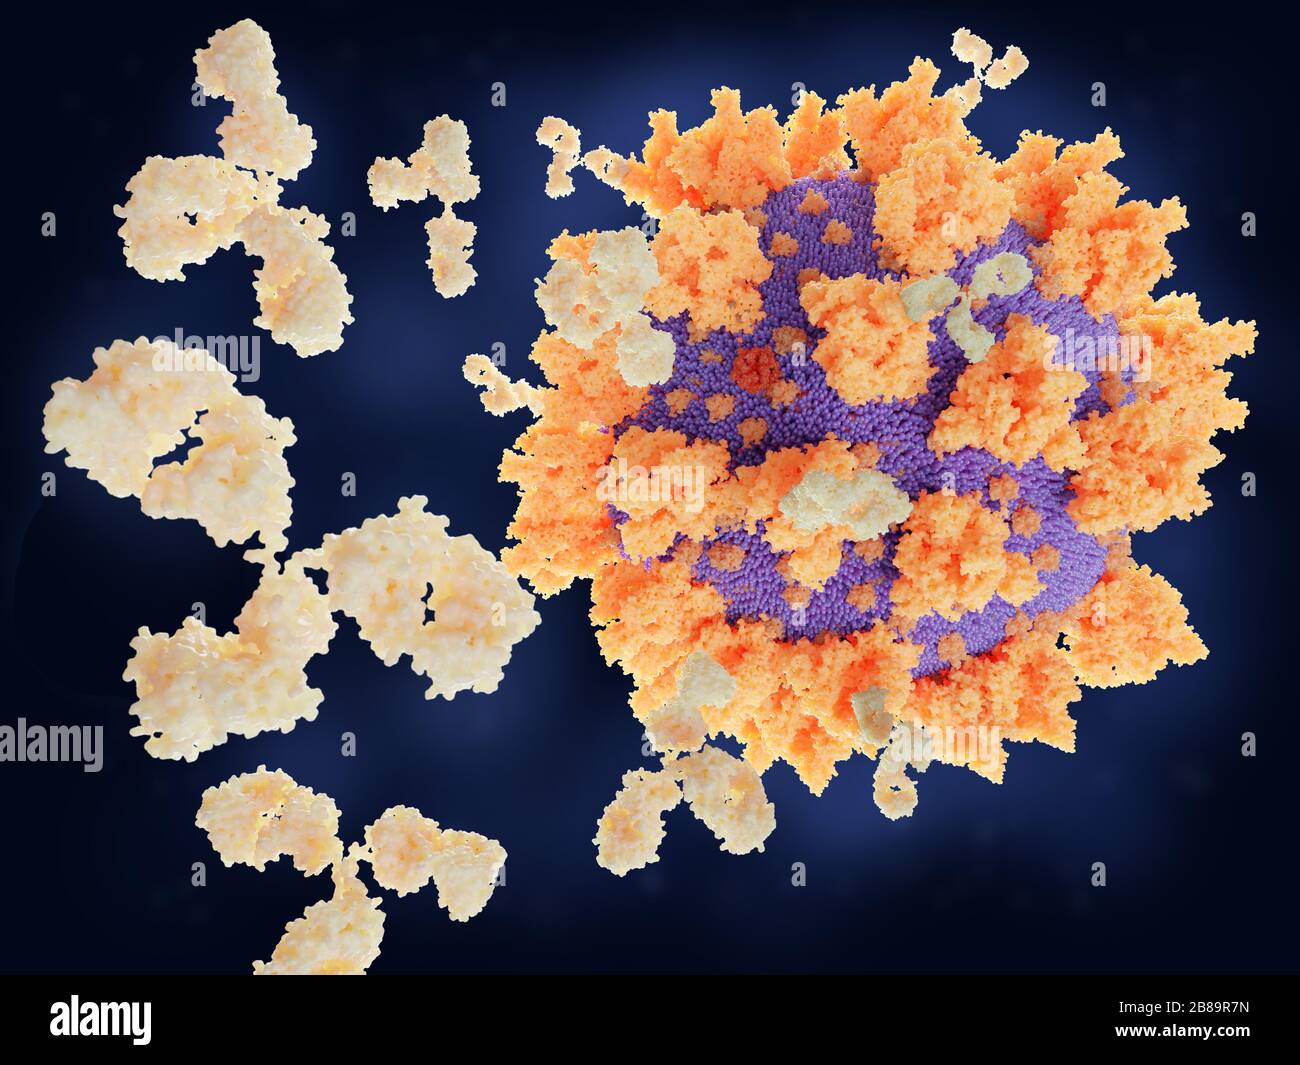 Antibodies responding to coronavirus particle, illustration Stock Photo